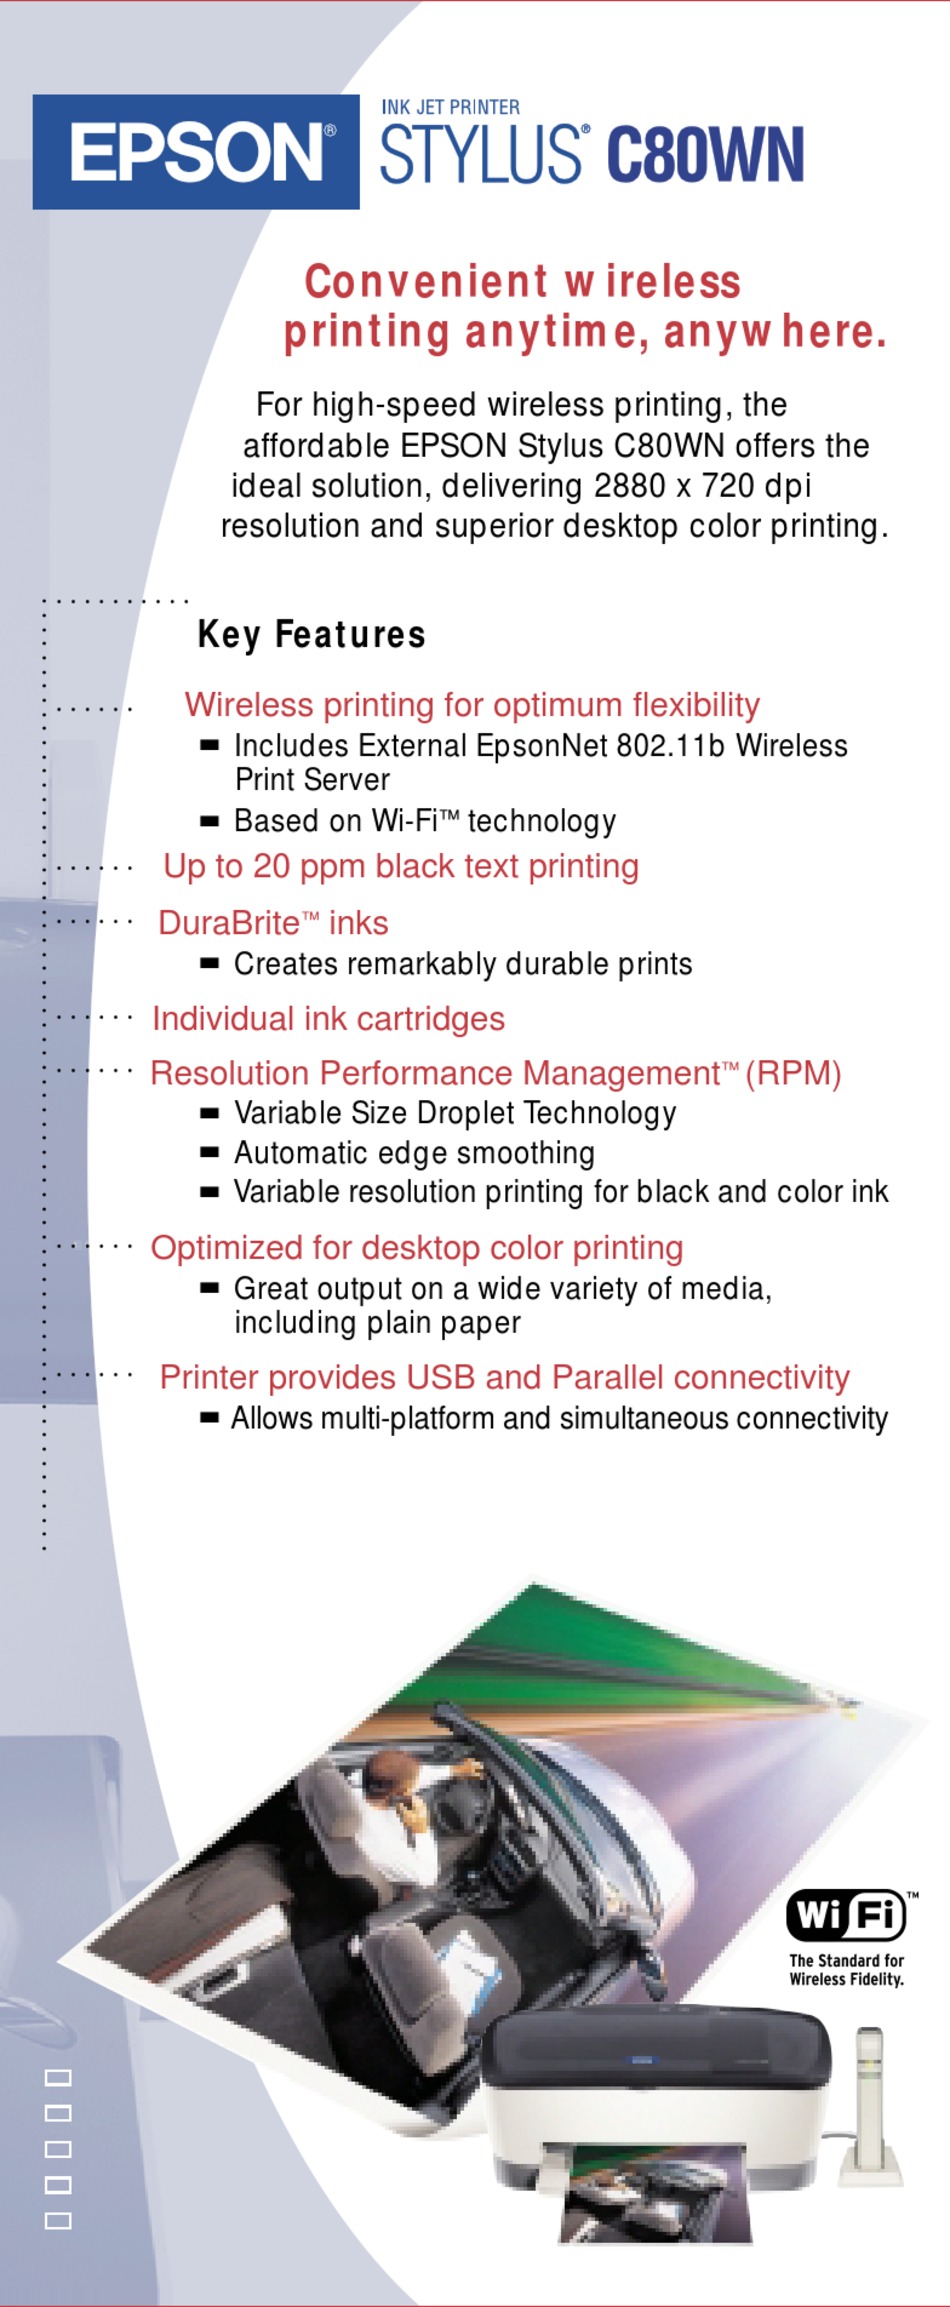 Epson Stylus C80wn Printer Specifications Manualslib 5693